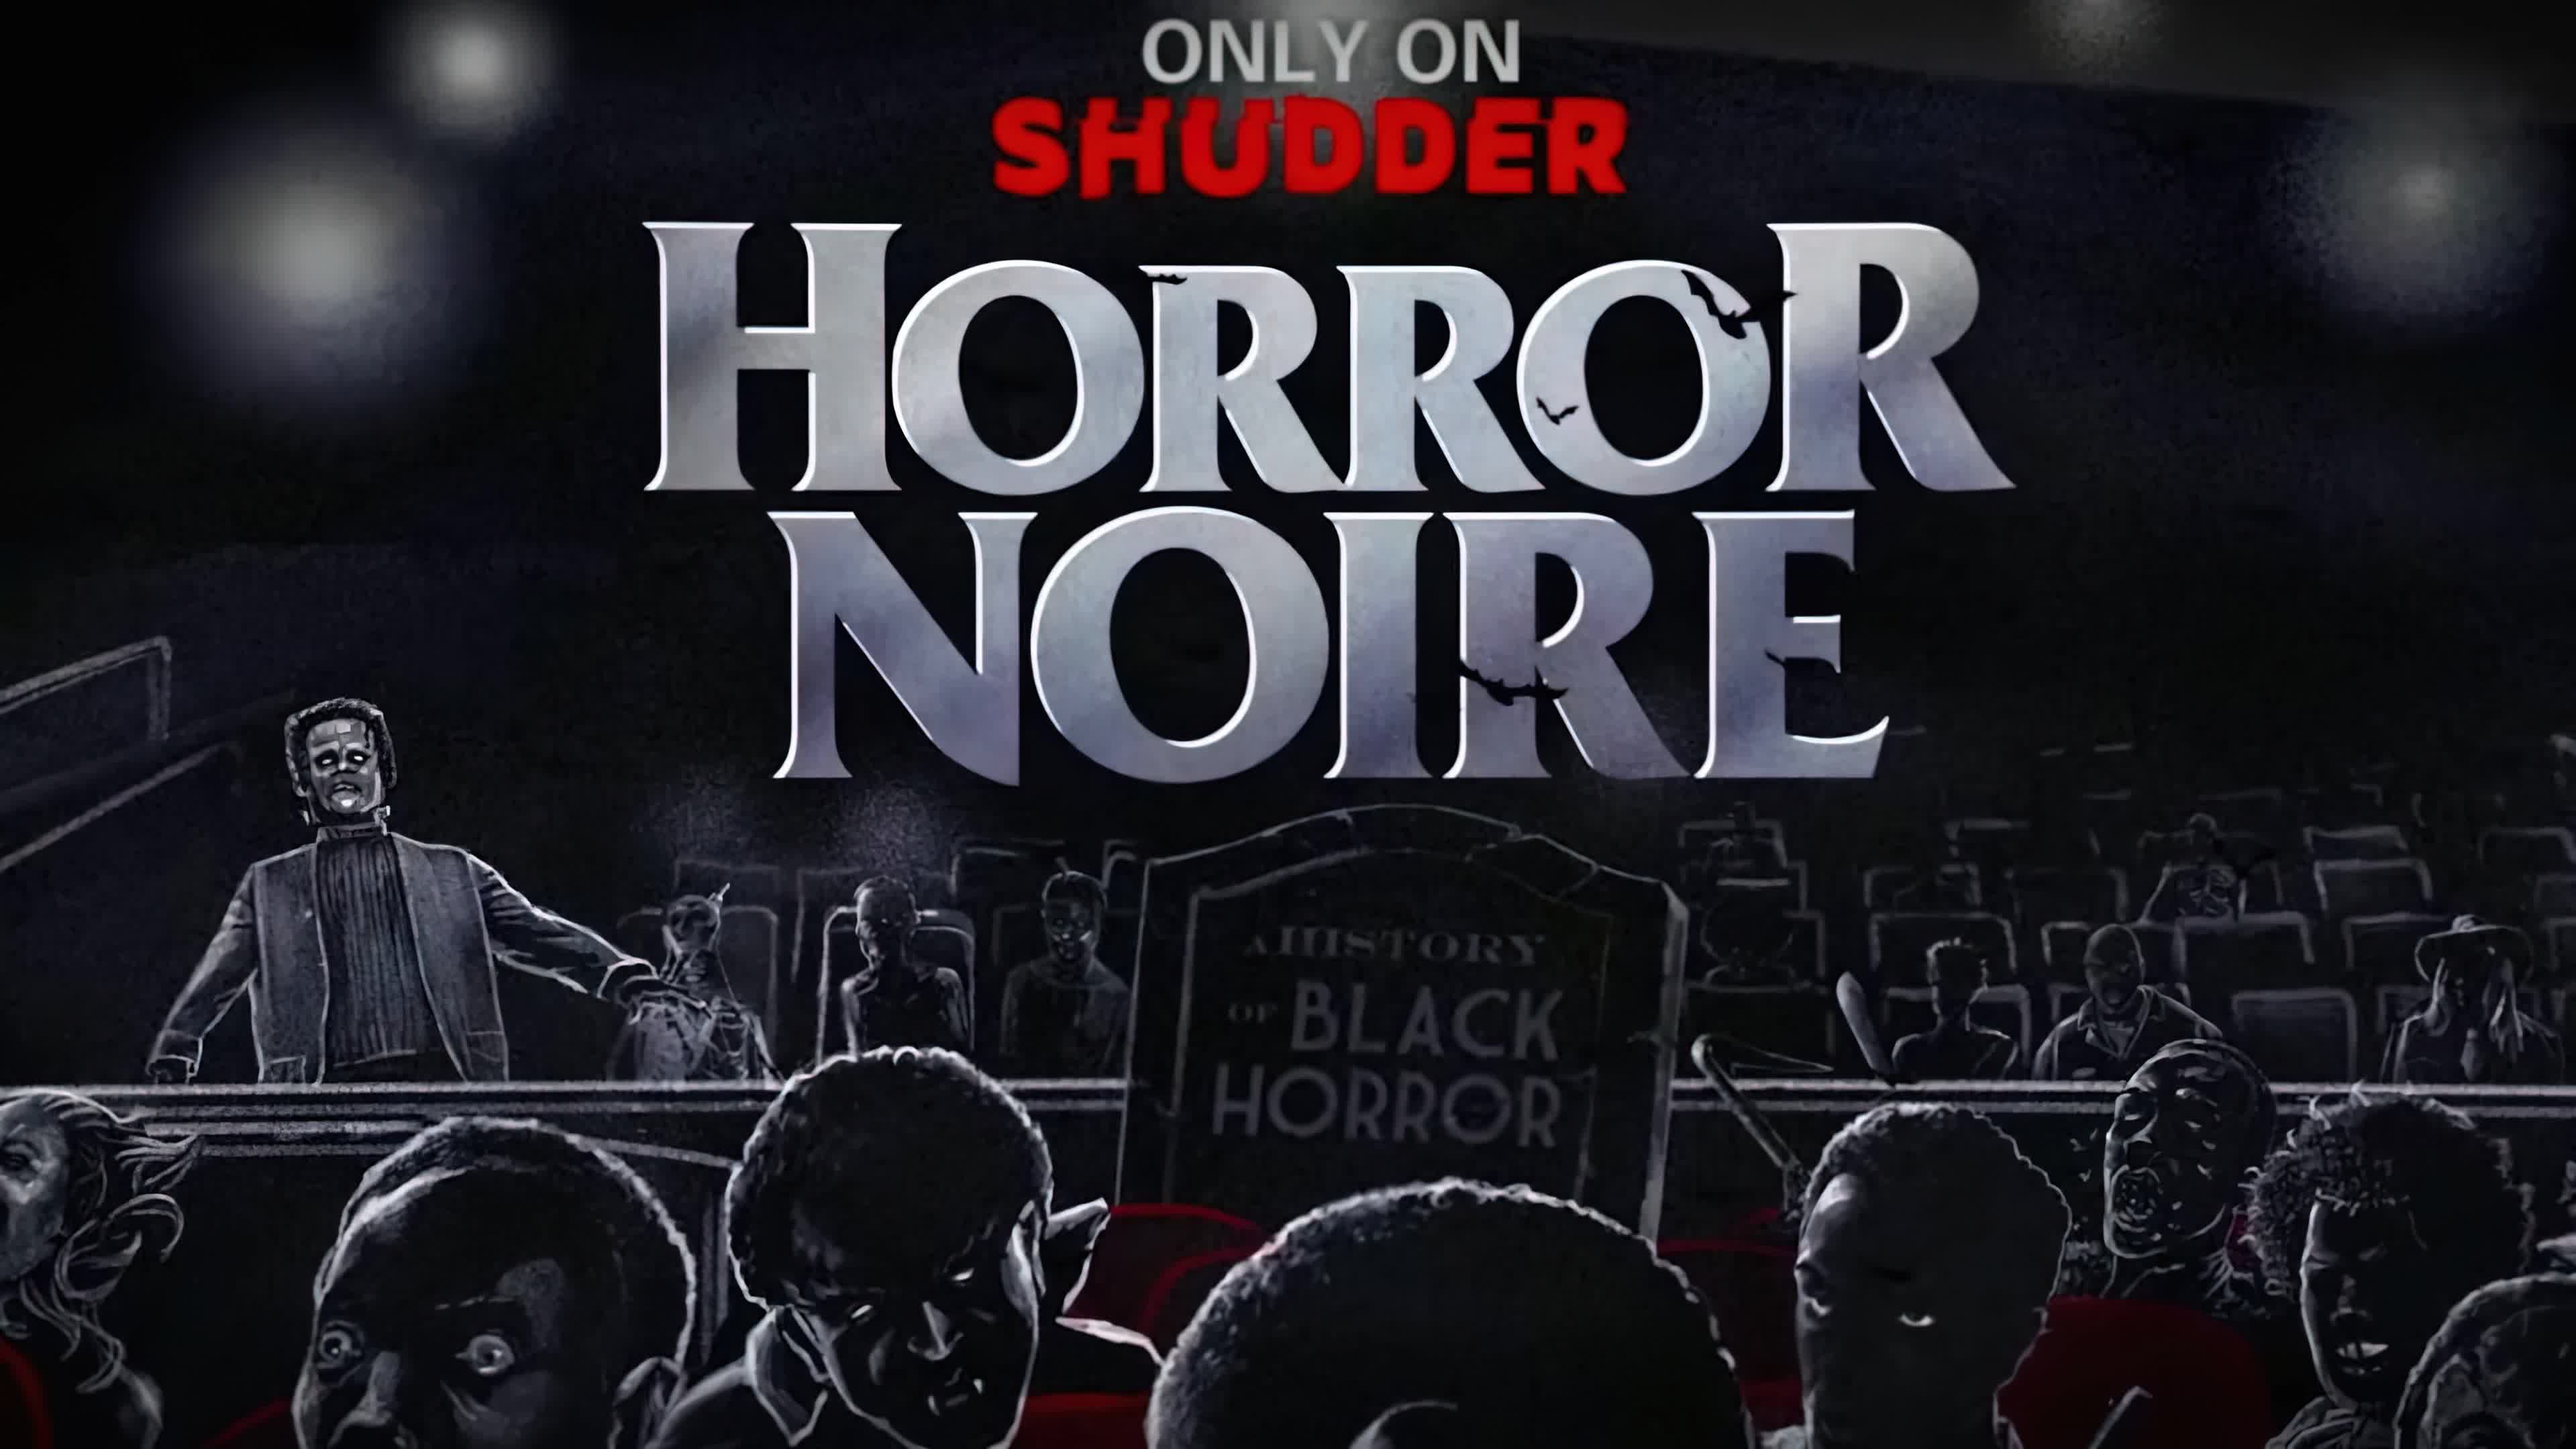 Horror Noire A History of Black Horror (2019) [NoSub]